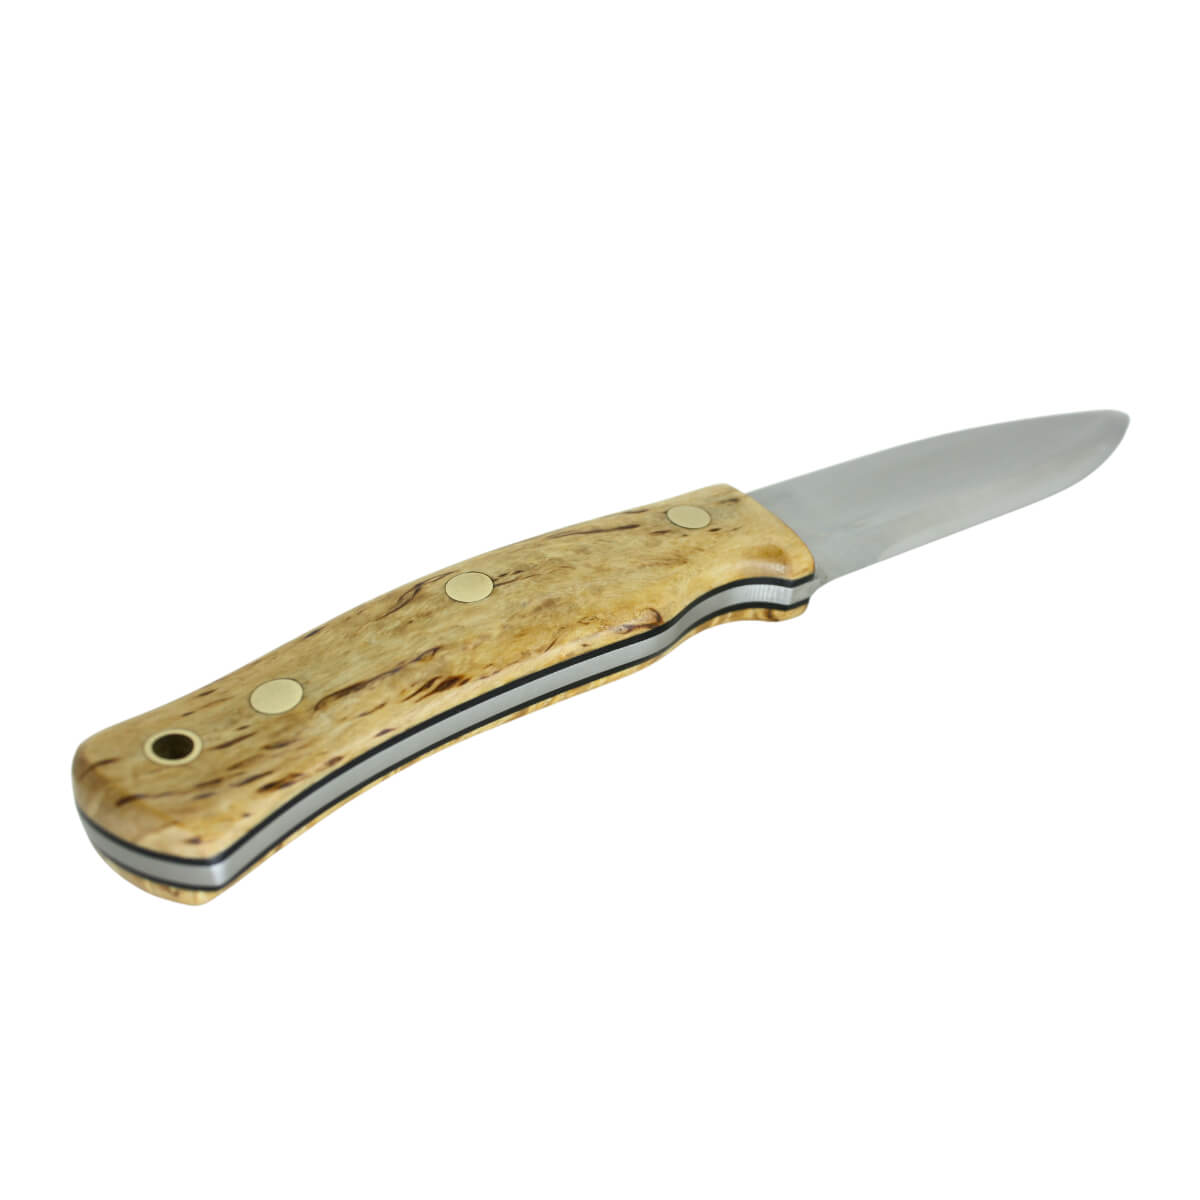 Casstrom No.10 Forest Knife - Curly Birch